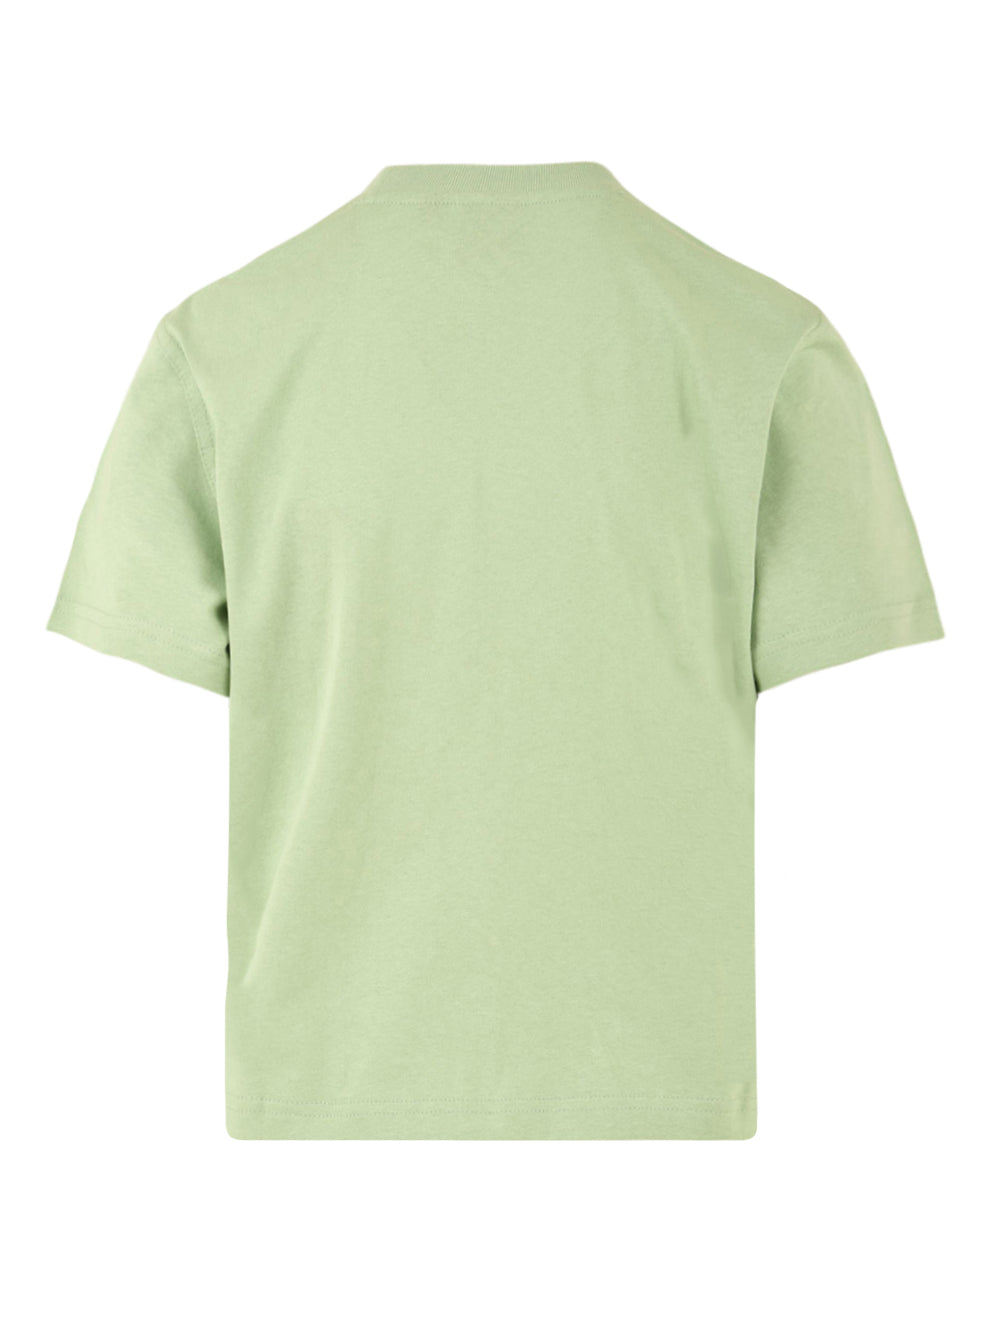 T-shirt Donna verde con logo, Dickies, retro